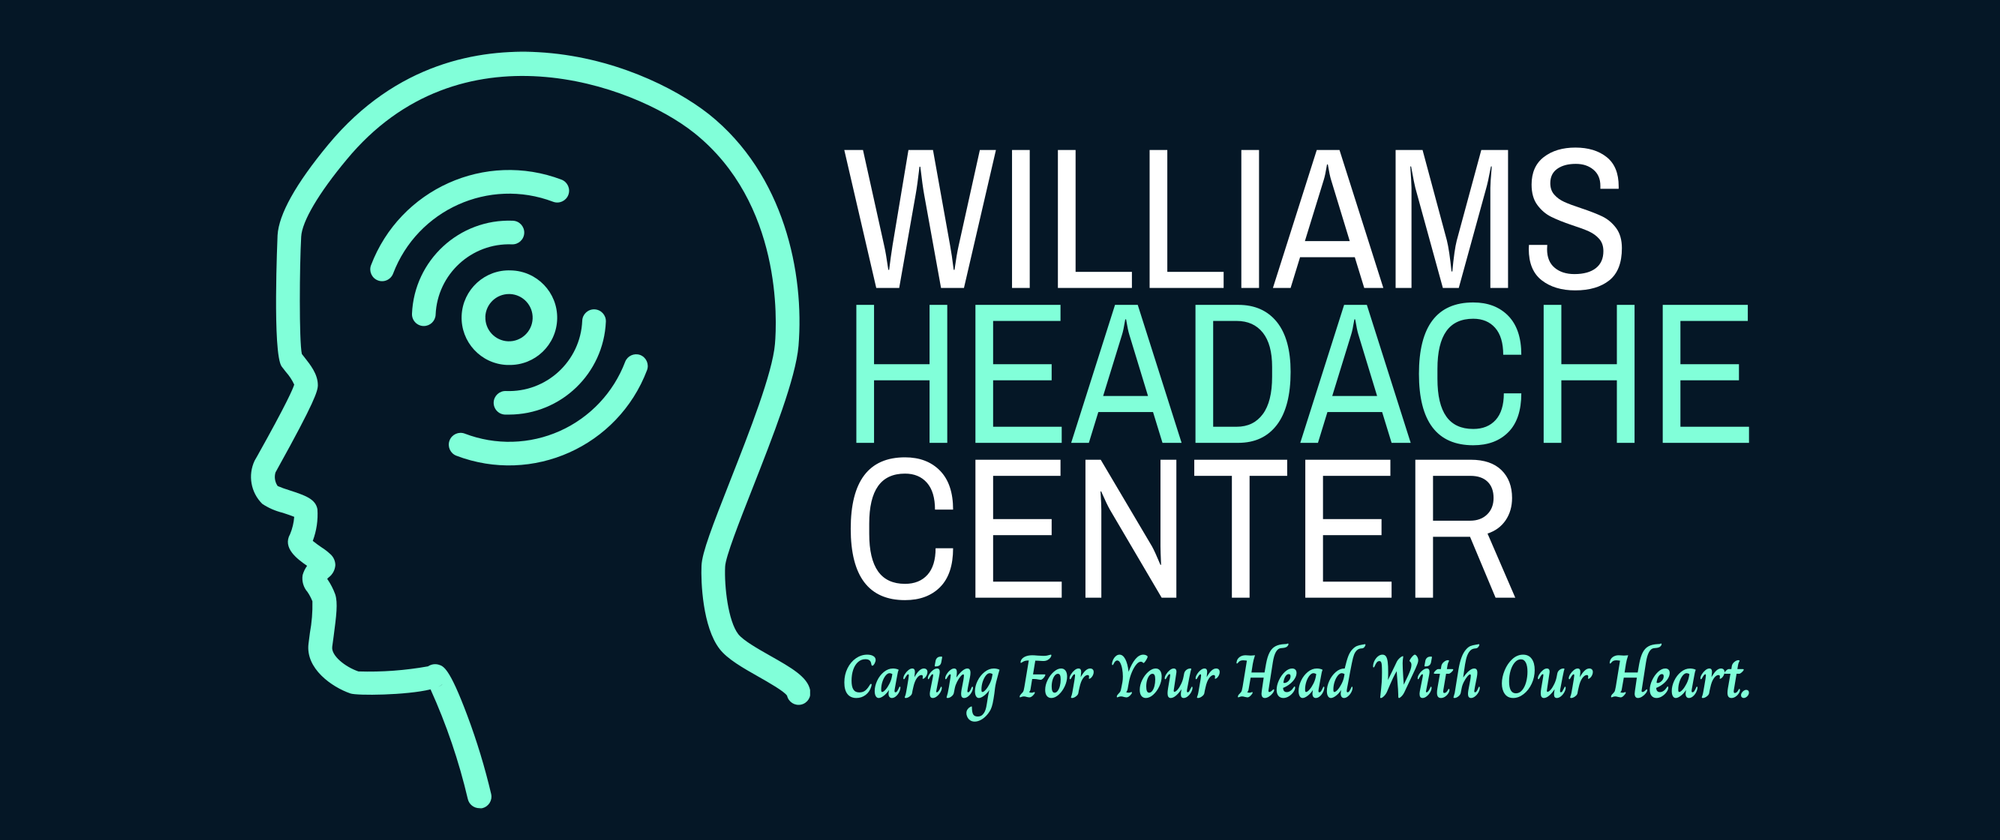 Williams Headache Center